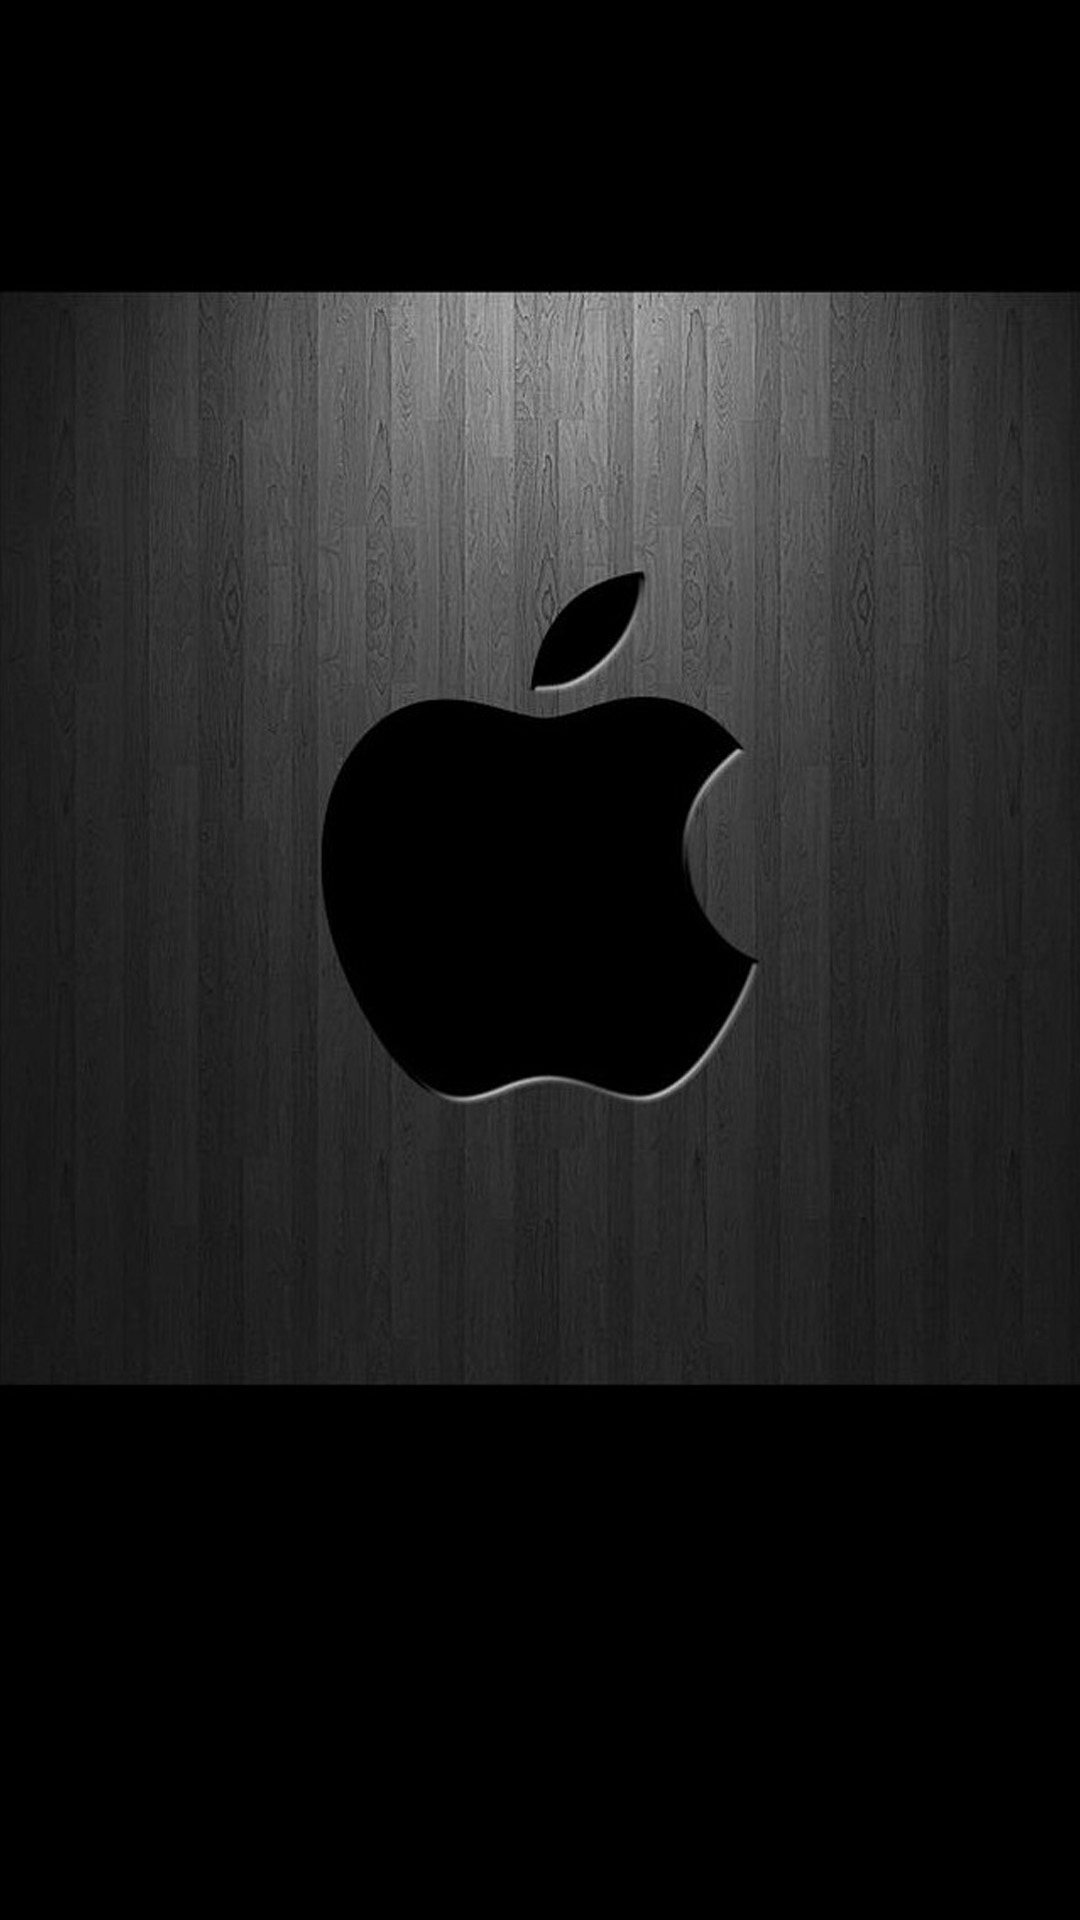 Download Free Apple Logo Background for Iphone | PixelsTalk.Net